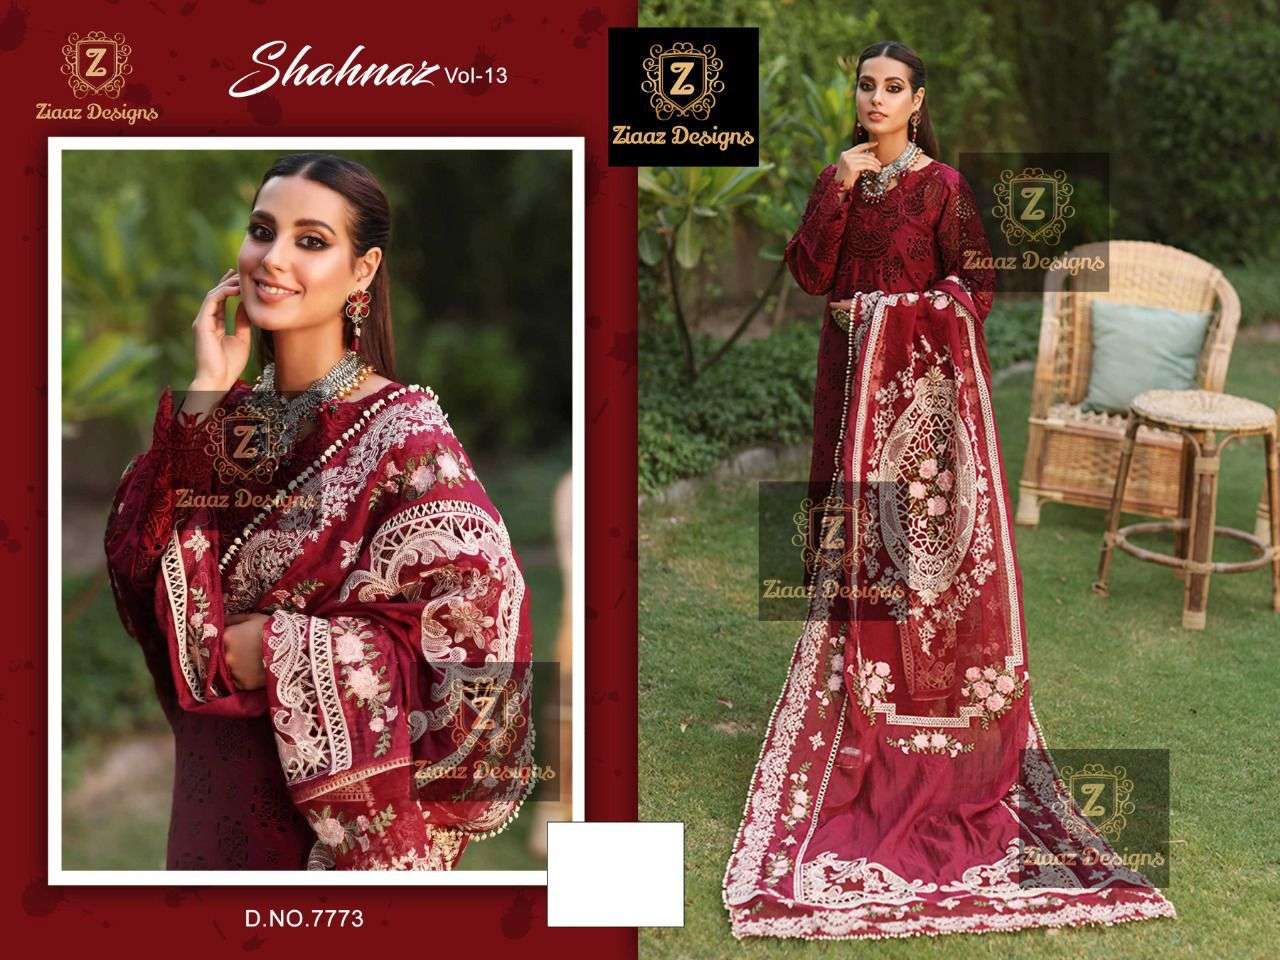 ziaaz designs shehnaz vol 13 design number 7773 semi stiched pakistani suits collection